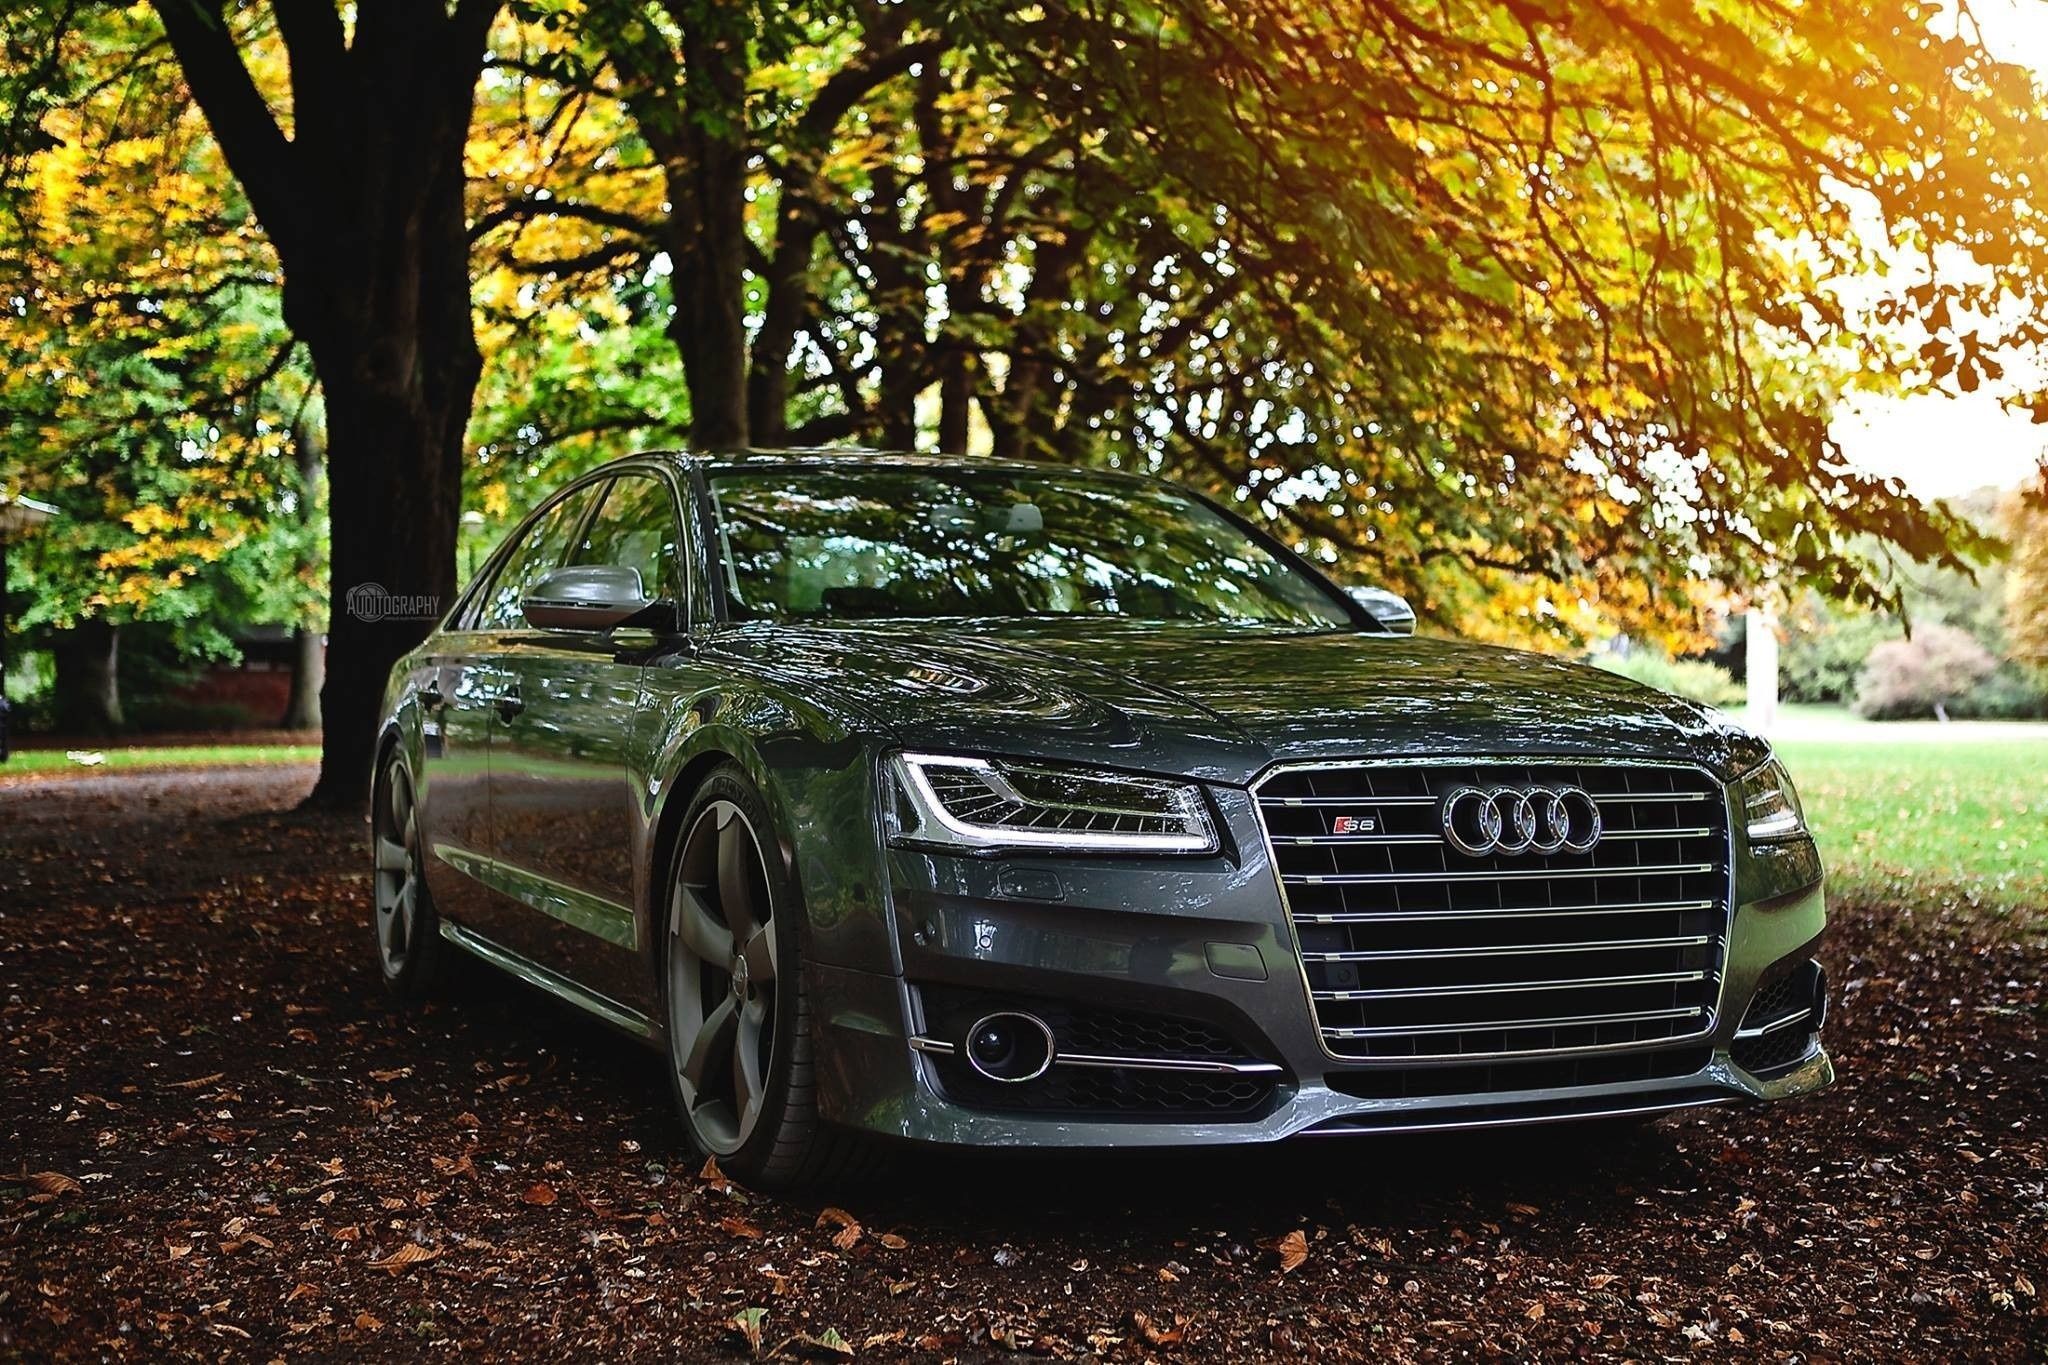 Wallpaper. Cars. photo. picture. Audi, car, autumn, beautiful